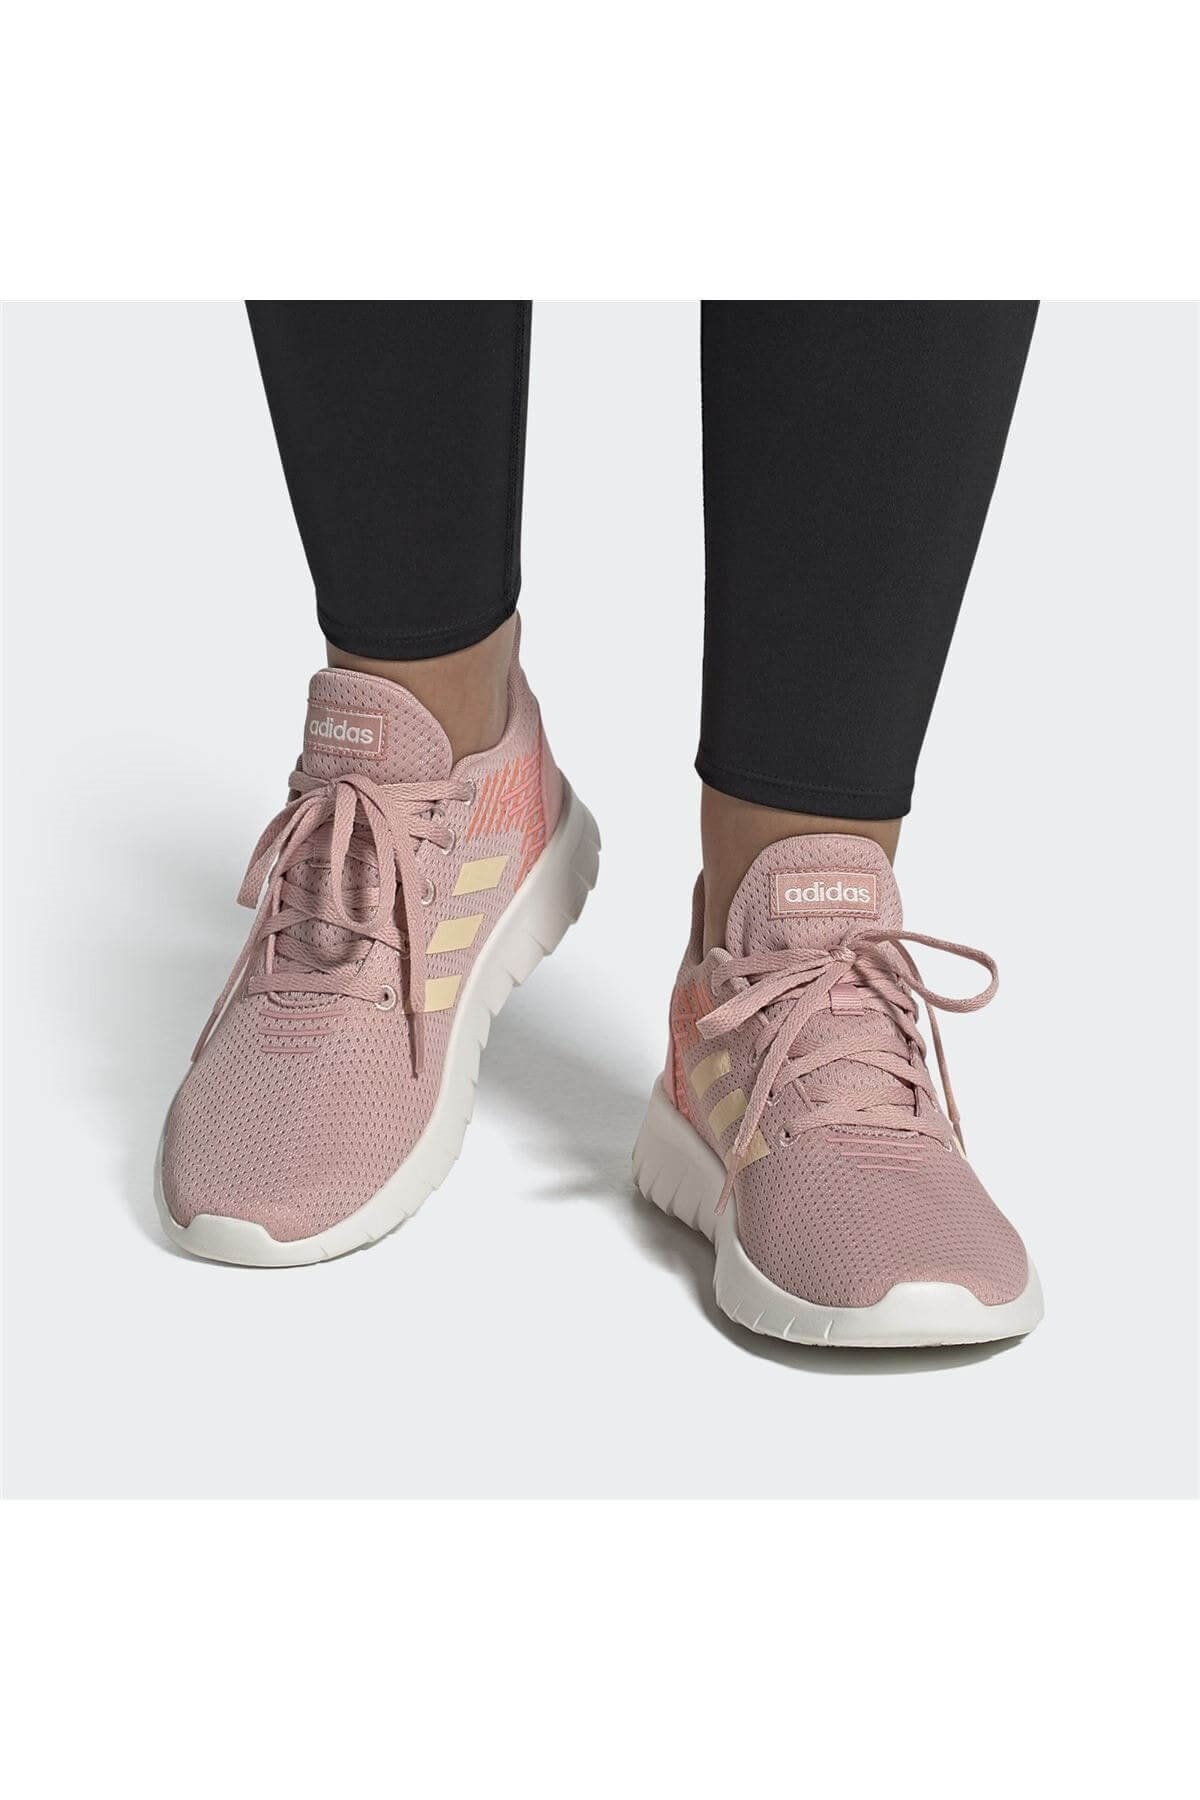 Adidas Asweerun Kadın Yürüyüş Koşu Ayakkabı EG3185PEMBE - EG3185PEMBE -  ADIDAS - Spor Ayakkabı - Spor Giyim - Çanta - Aksesuar | sahilspor.com